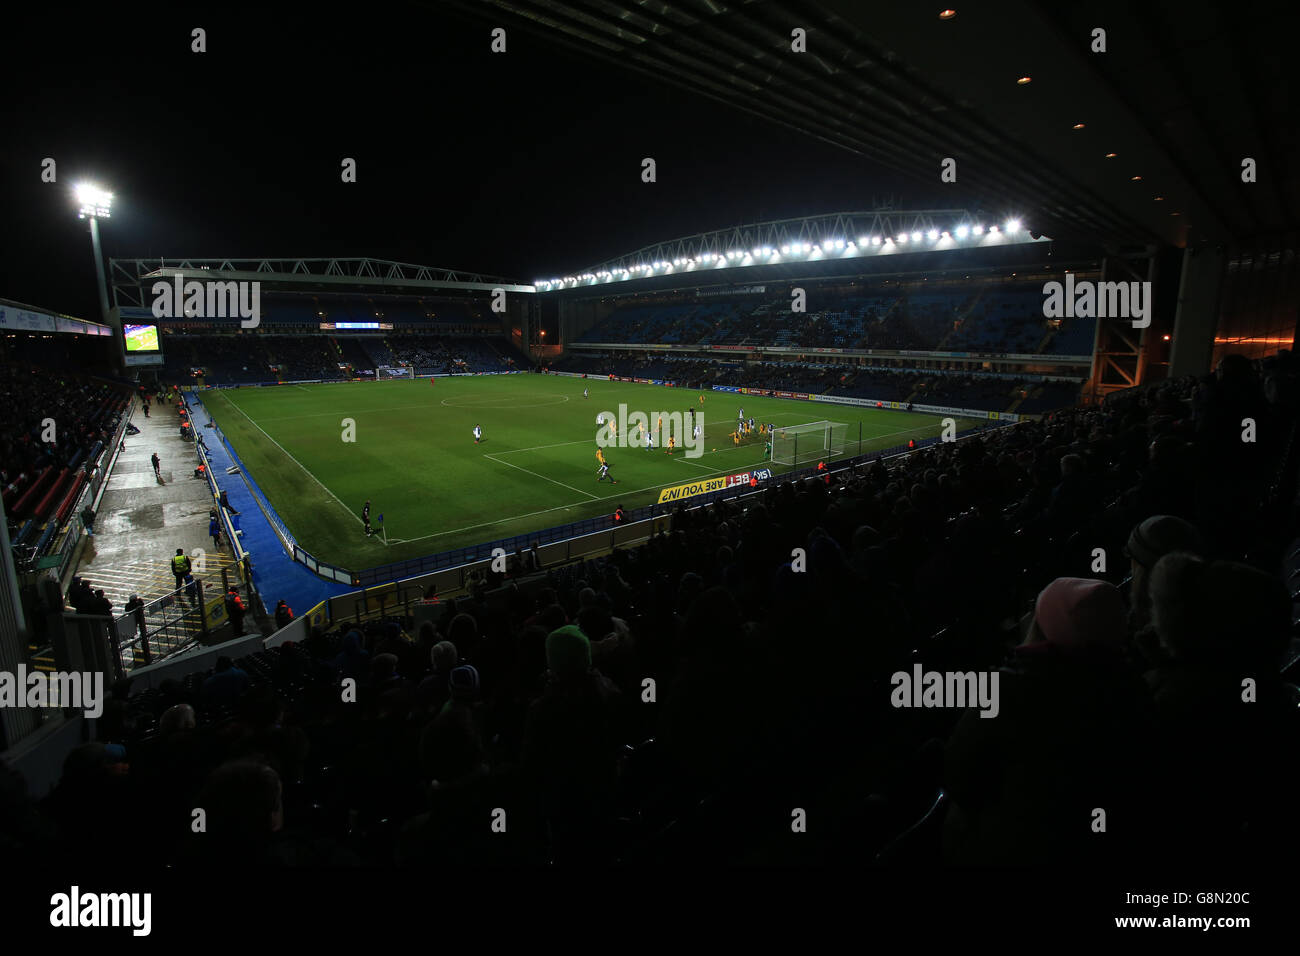 Blackburn Rovers' Ewood Park Stadium during game against Fulham Stock Photo